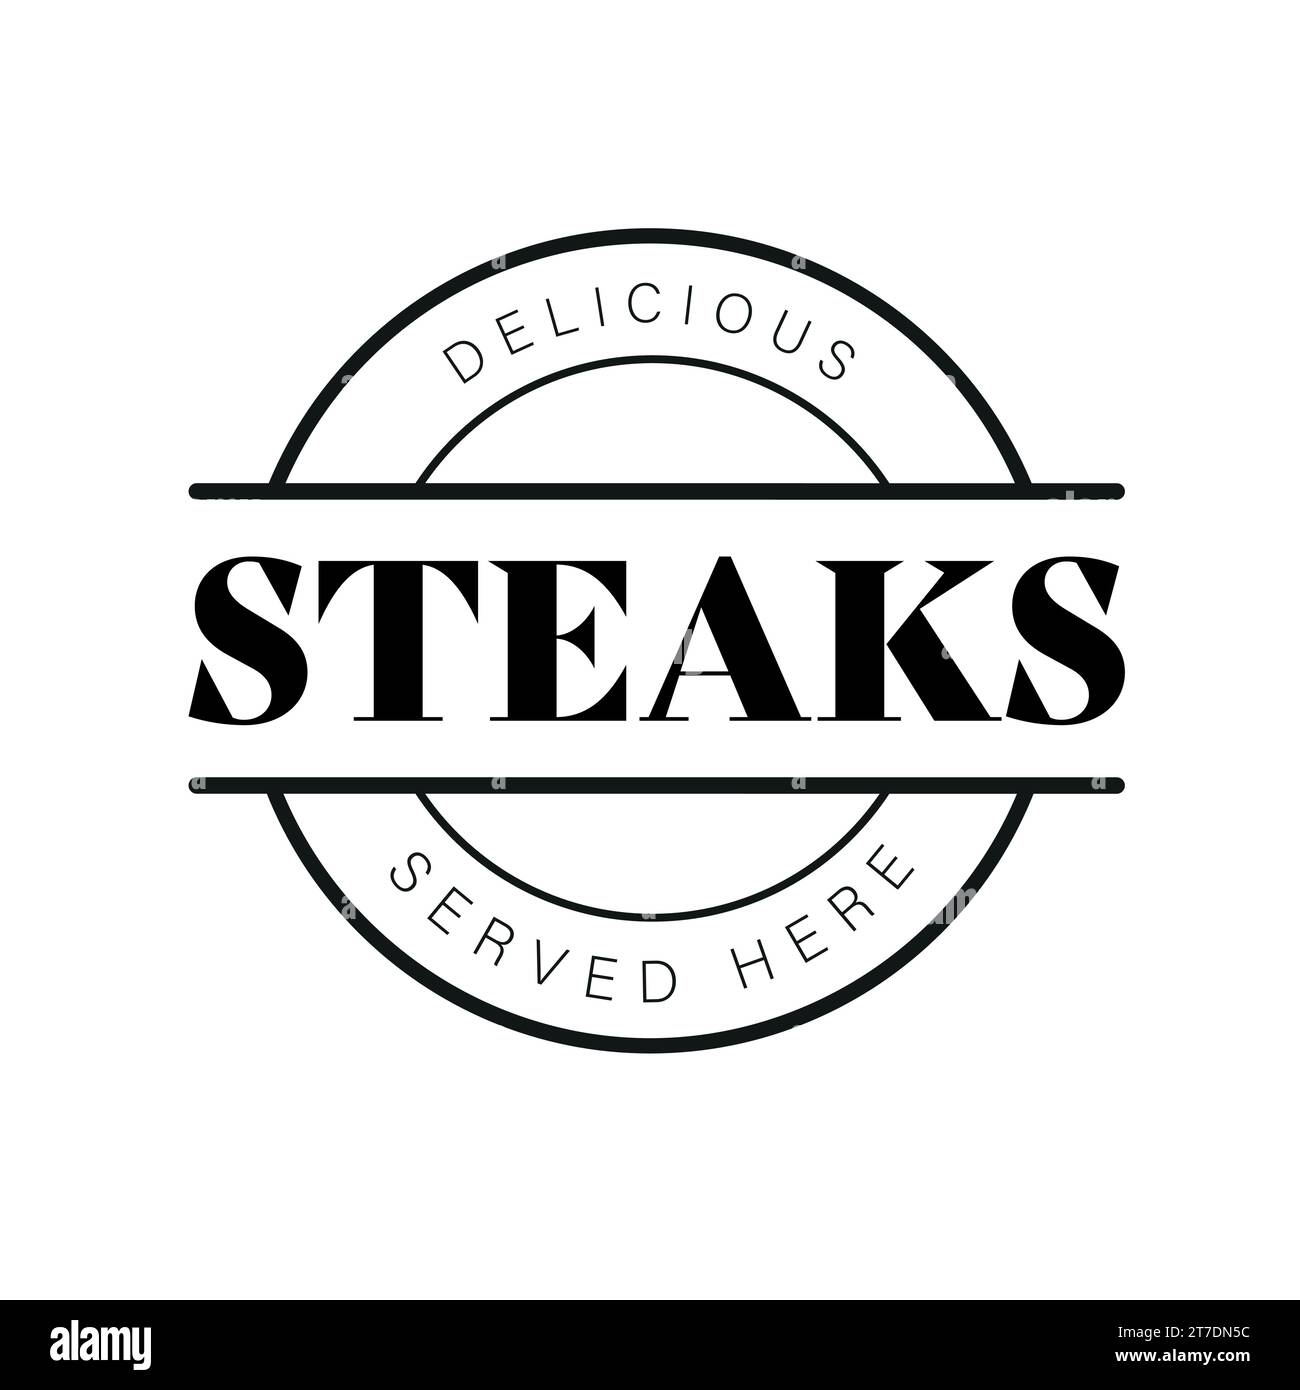 Delicious Steaks vintage stamp logo Stock Vector